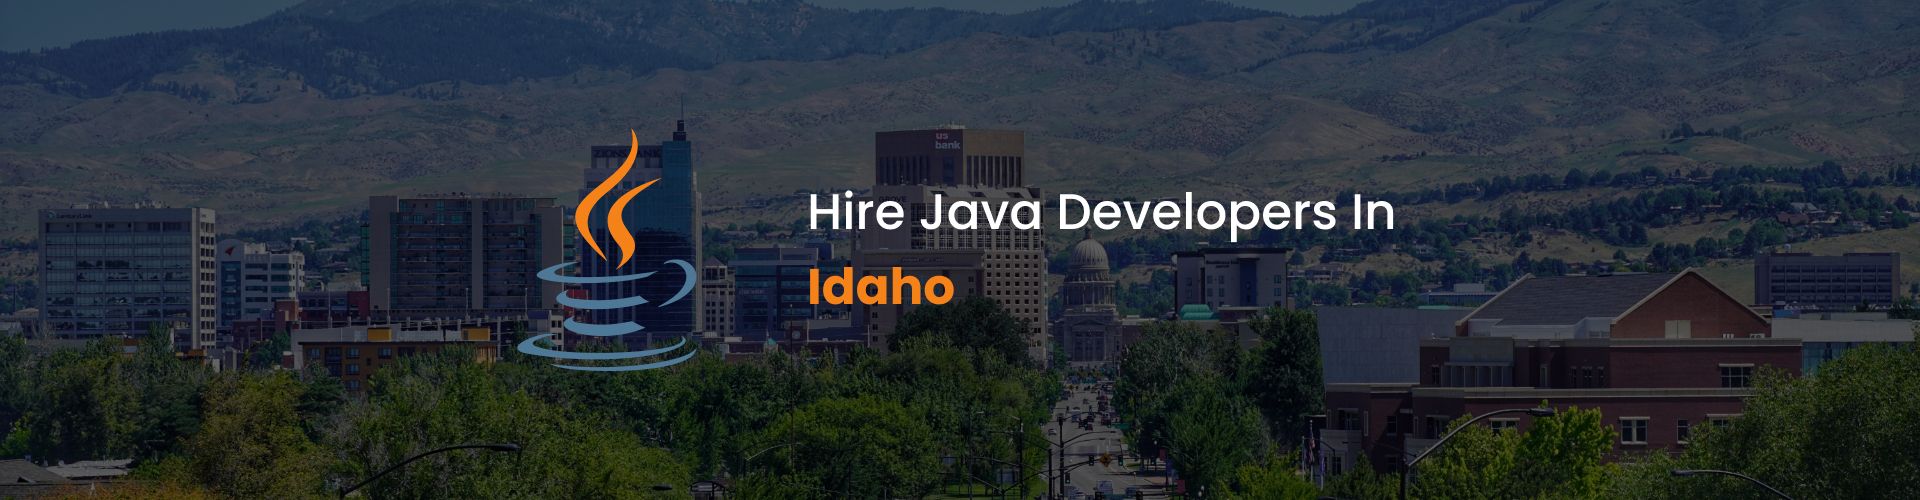 hire java developers in idaho